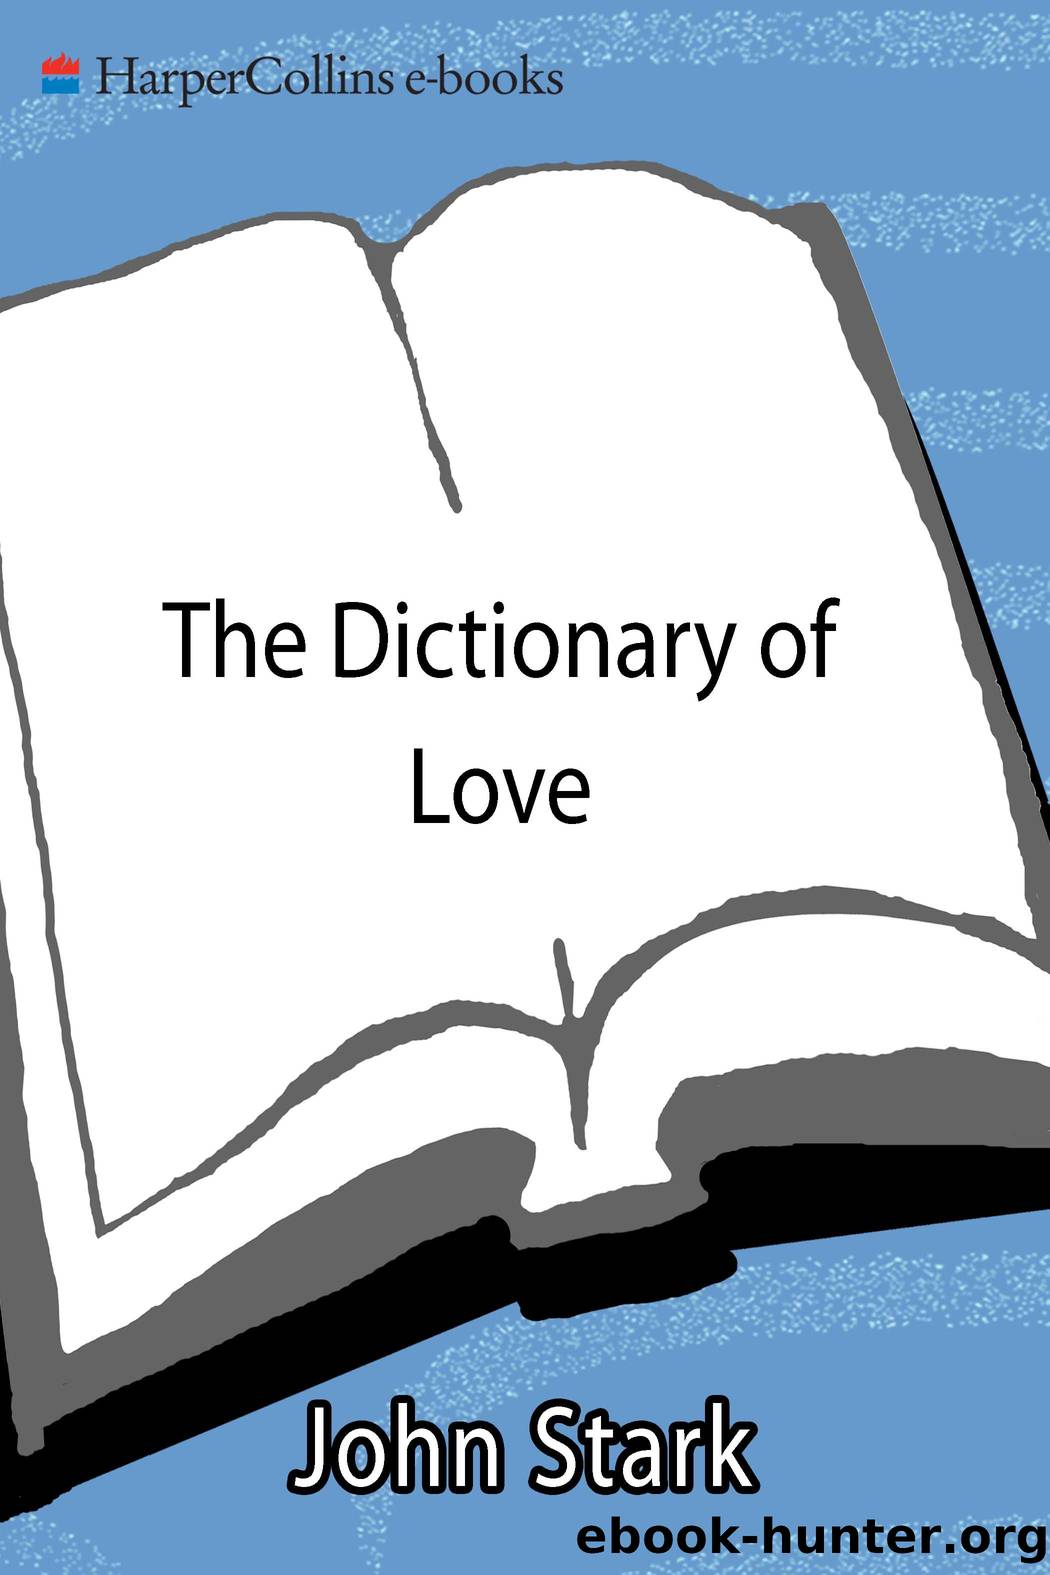 The Dictionary of Love by John Stark